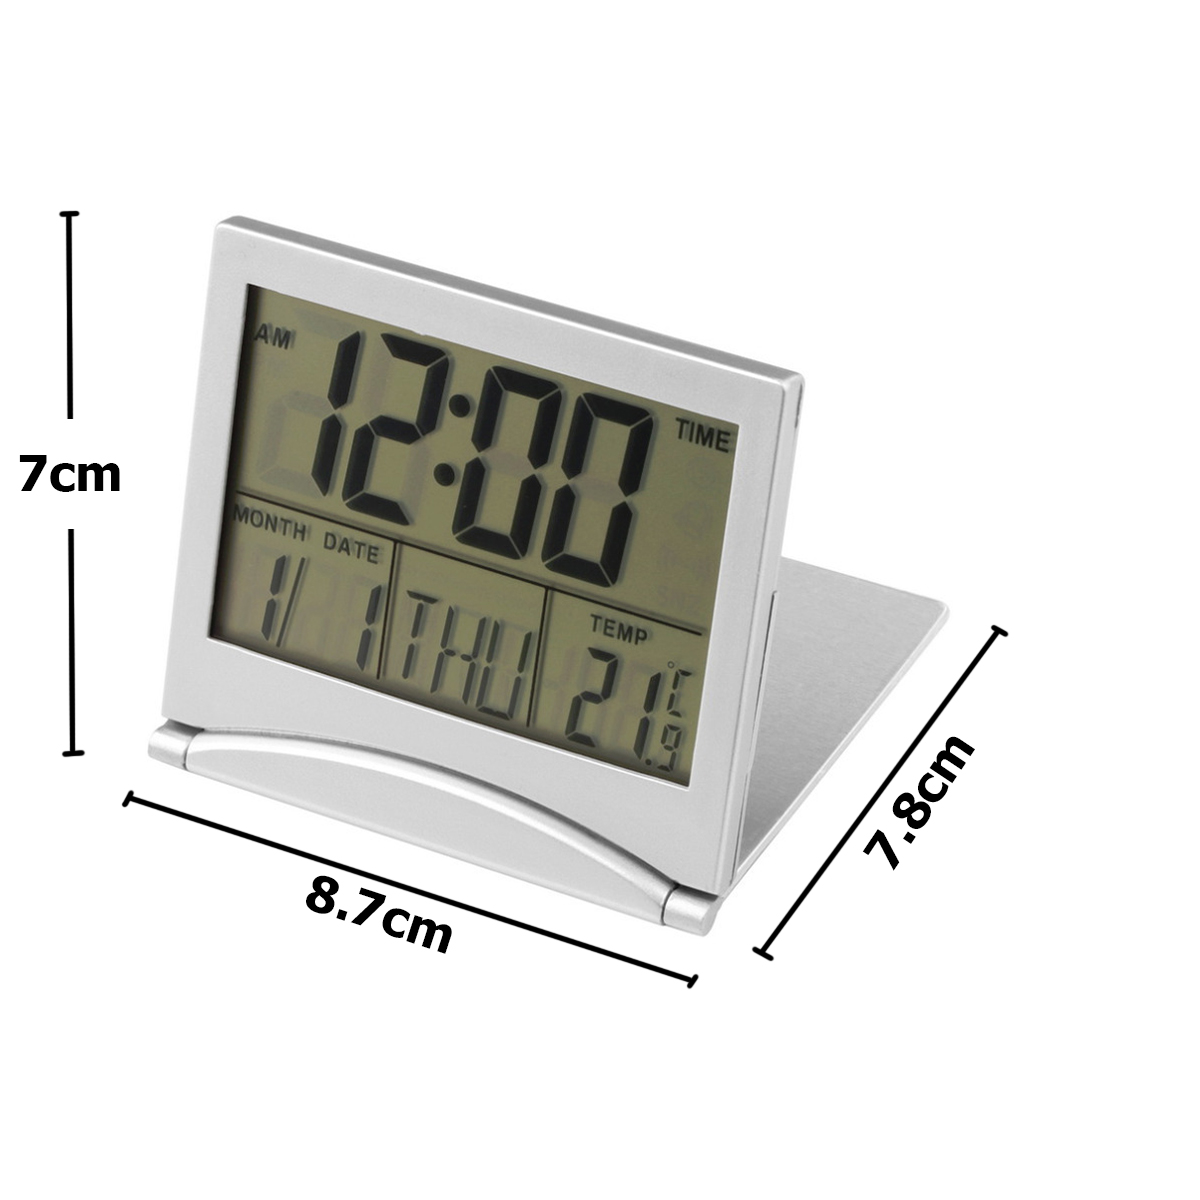 Digital-LCD-Screen-Travel-Alarm-Clocks-Table-Desk-Thermometer-Timer-Calendar-1164394-2